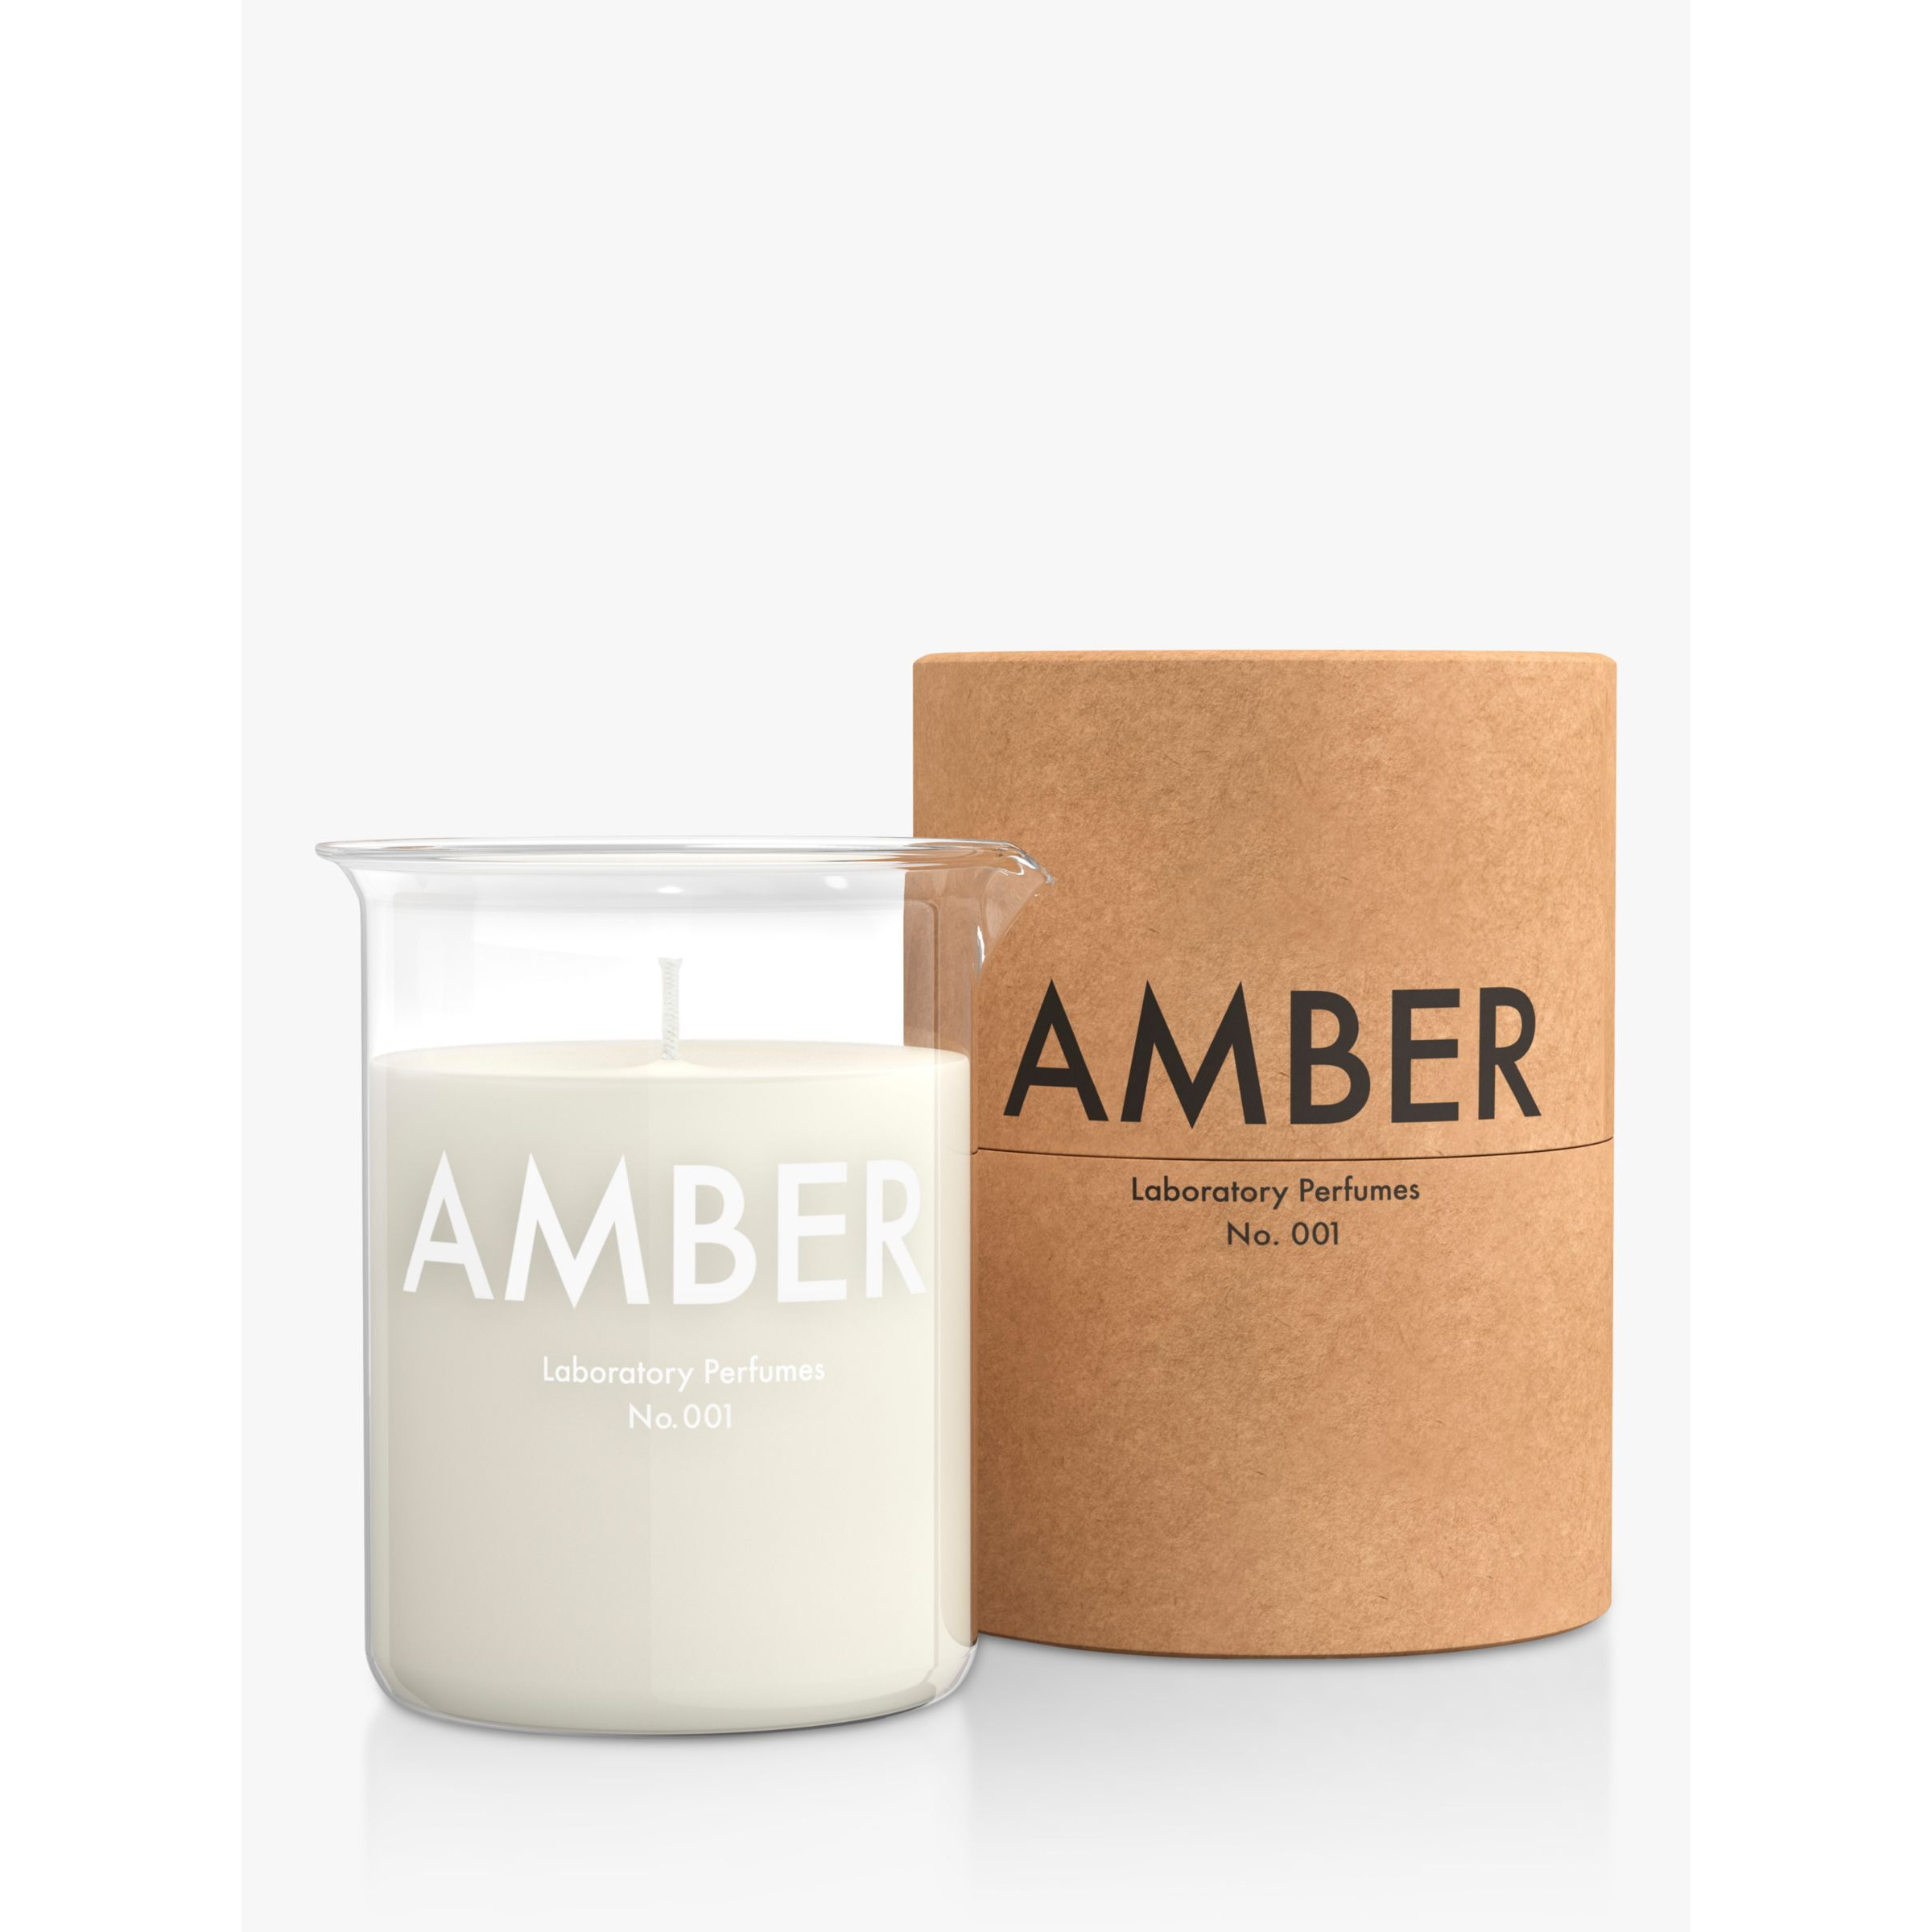 Laboratory Perfumes Amber Candle, 200g - image 1